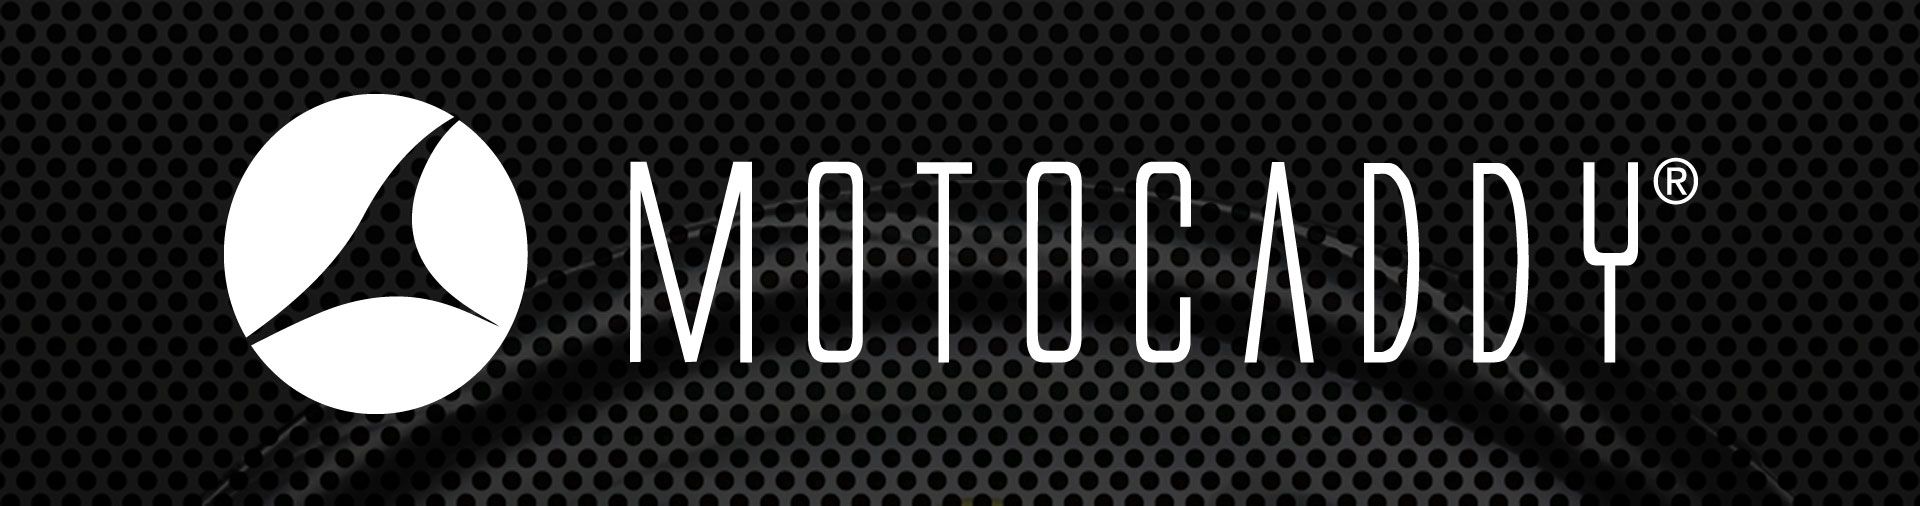 Motocaddy Brand